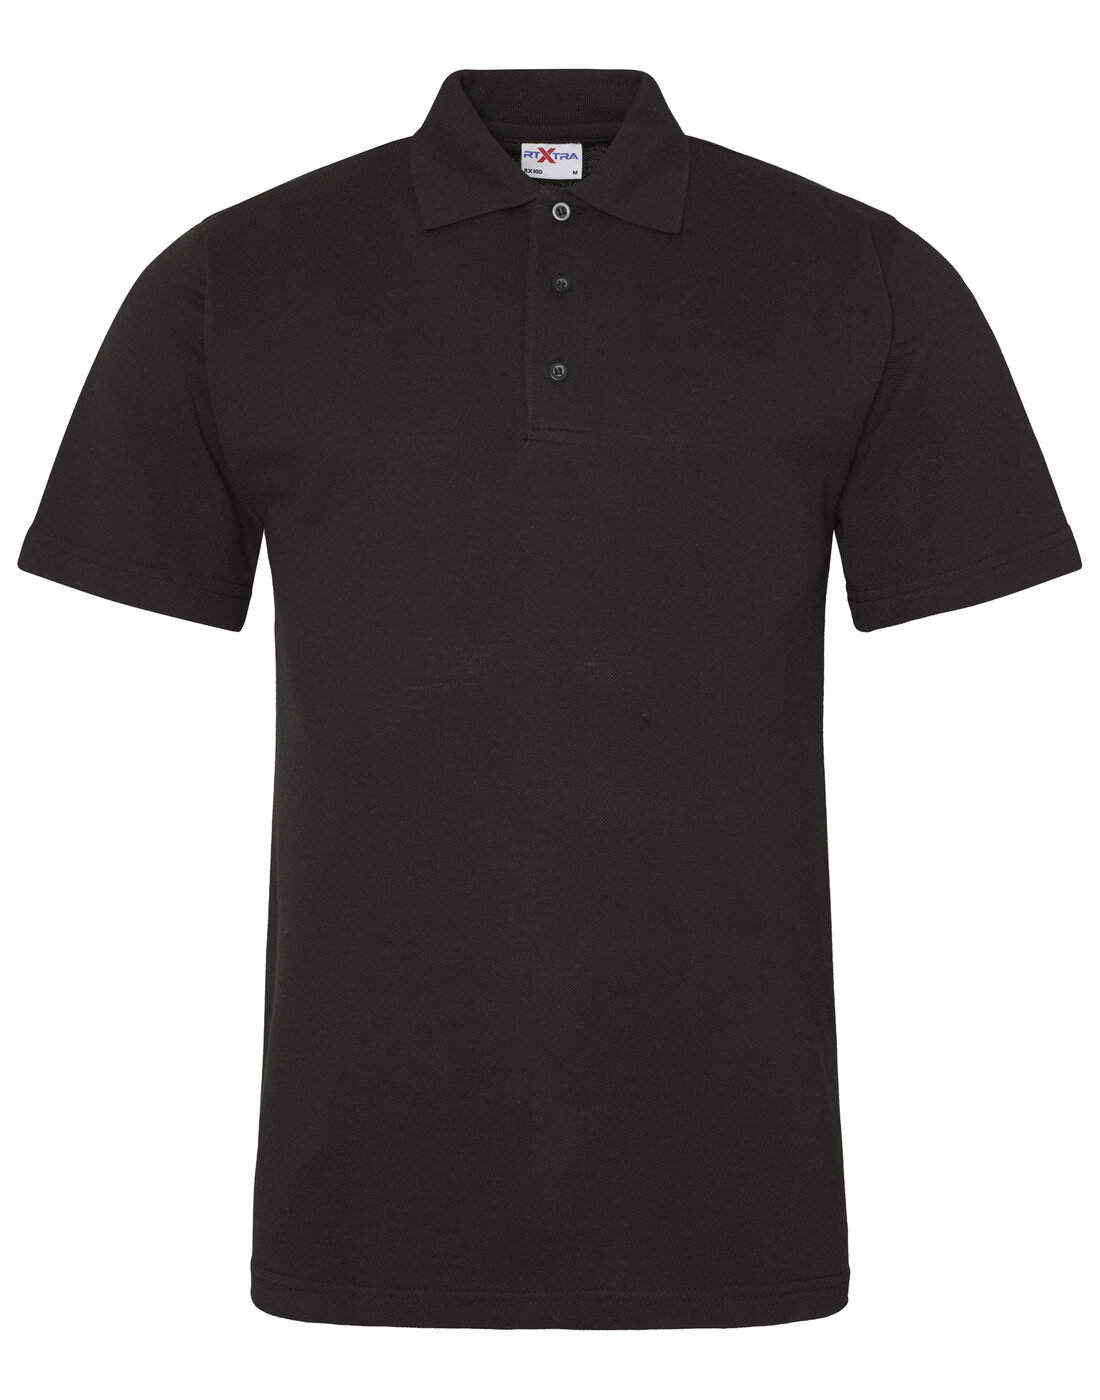 RTXtra Men's Classic Polo Tee RX100 Polycotton Plain Top Short Sleeves T-shirt 